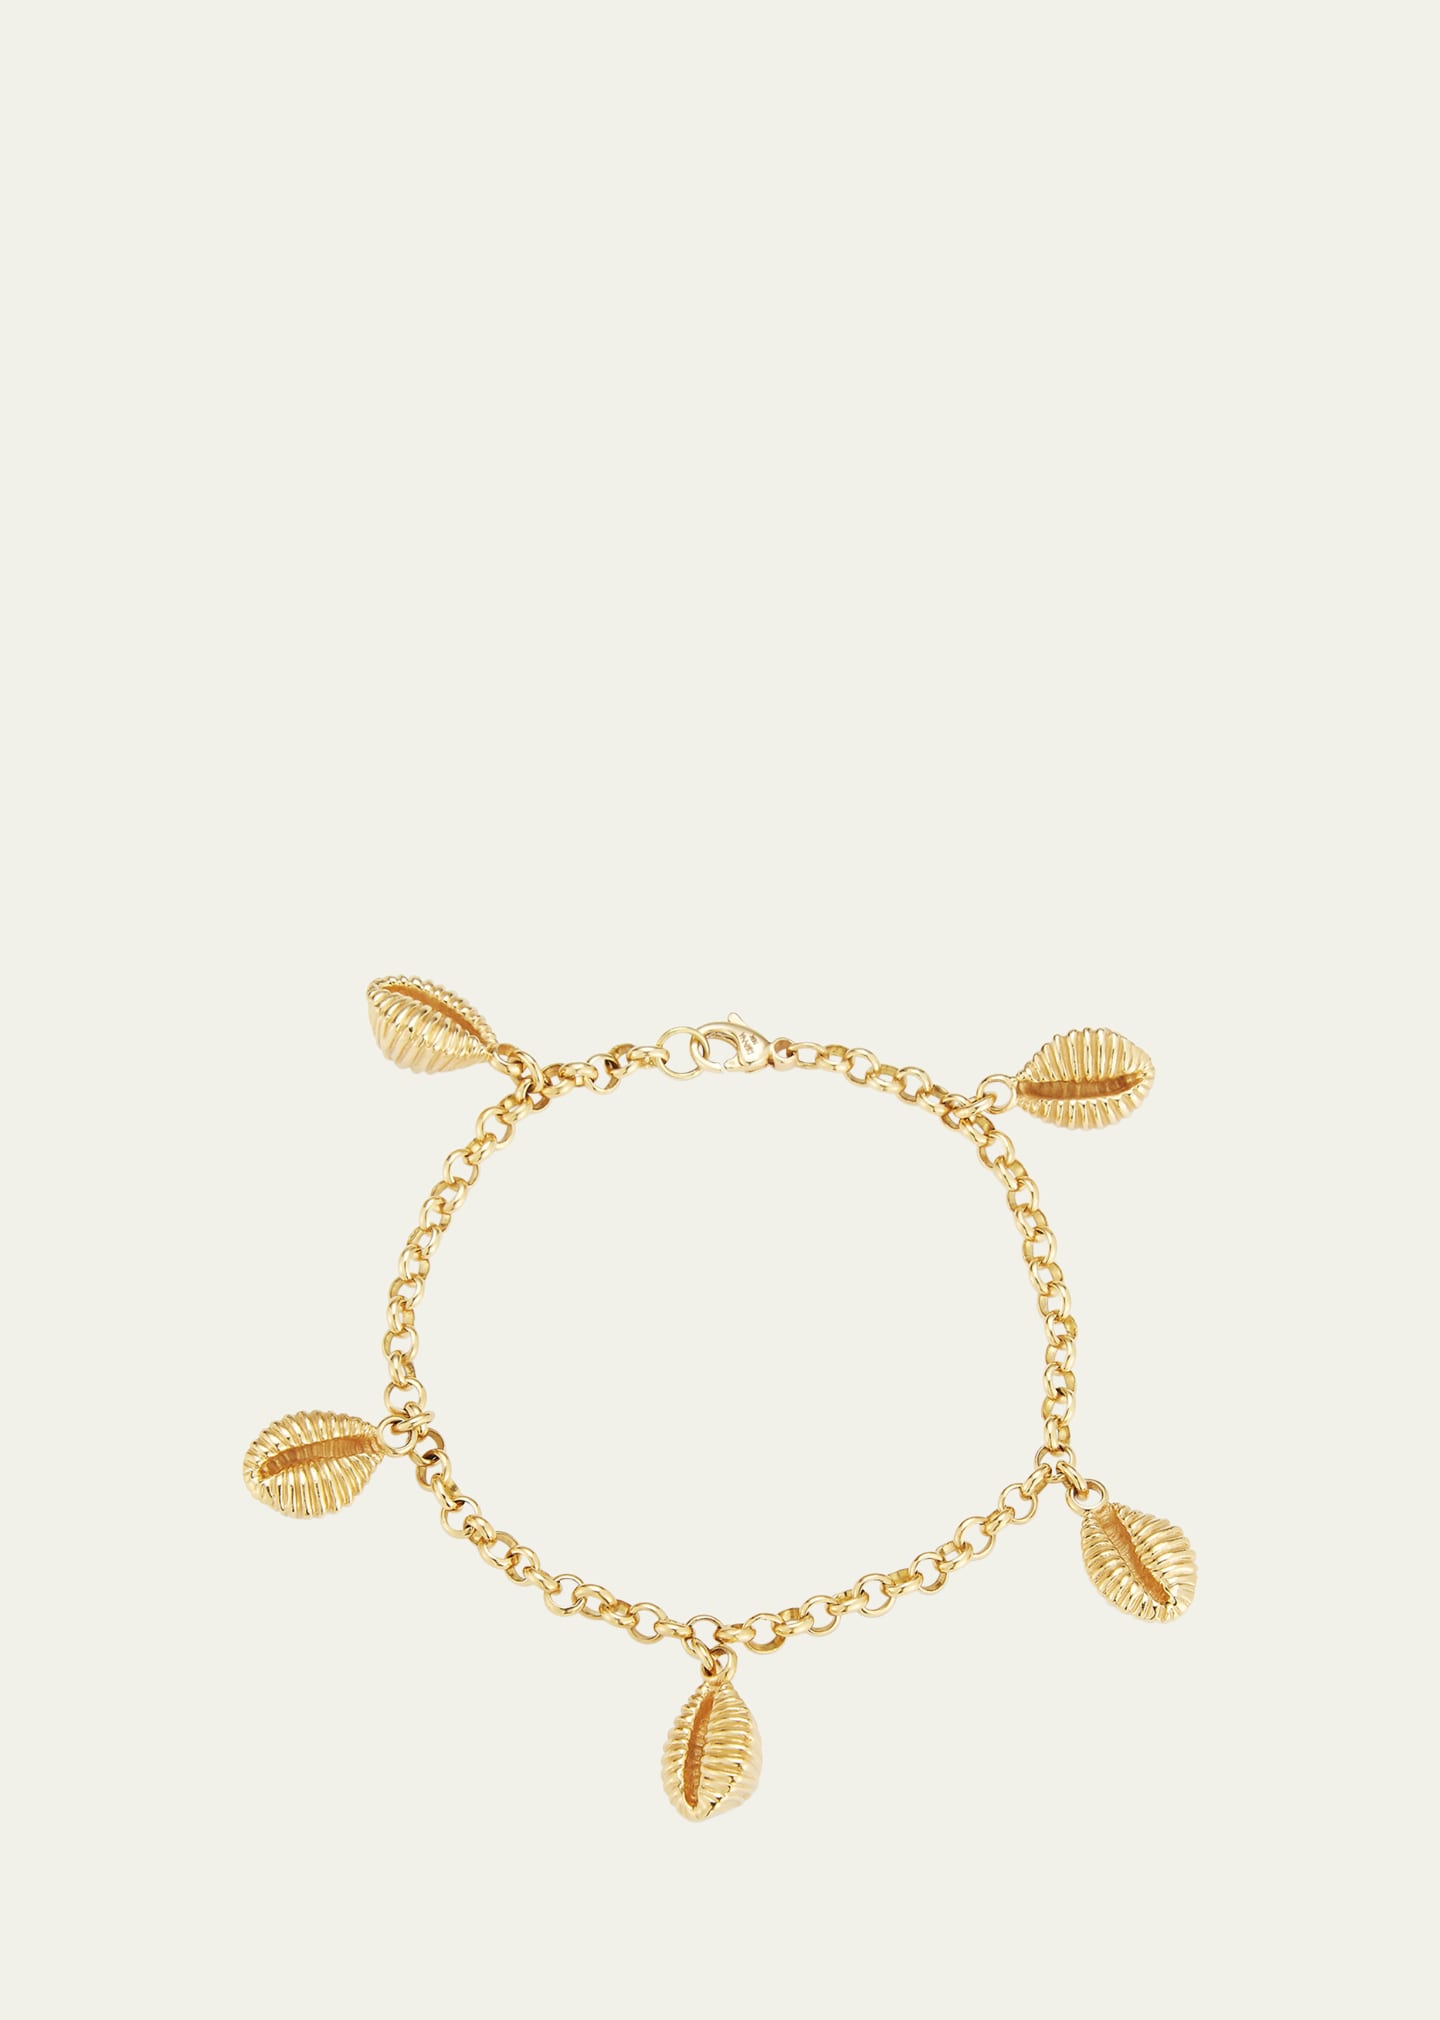 18K Yellow Gold Shell Charm Bracelet